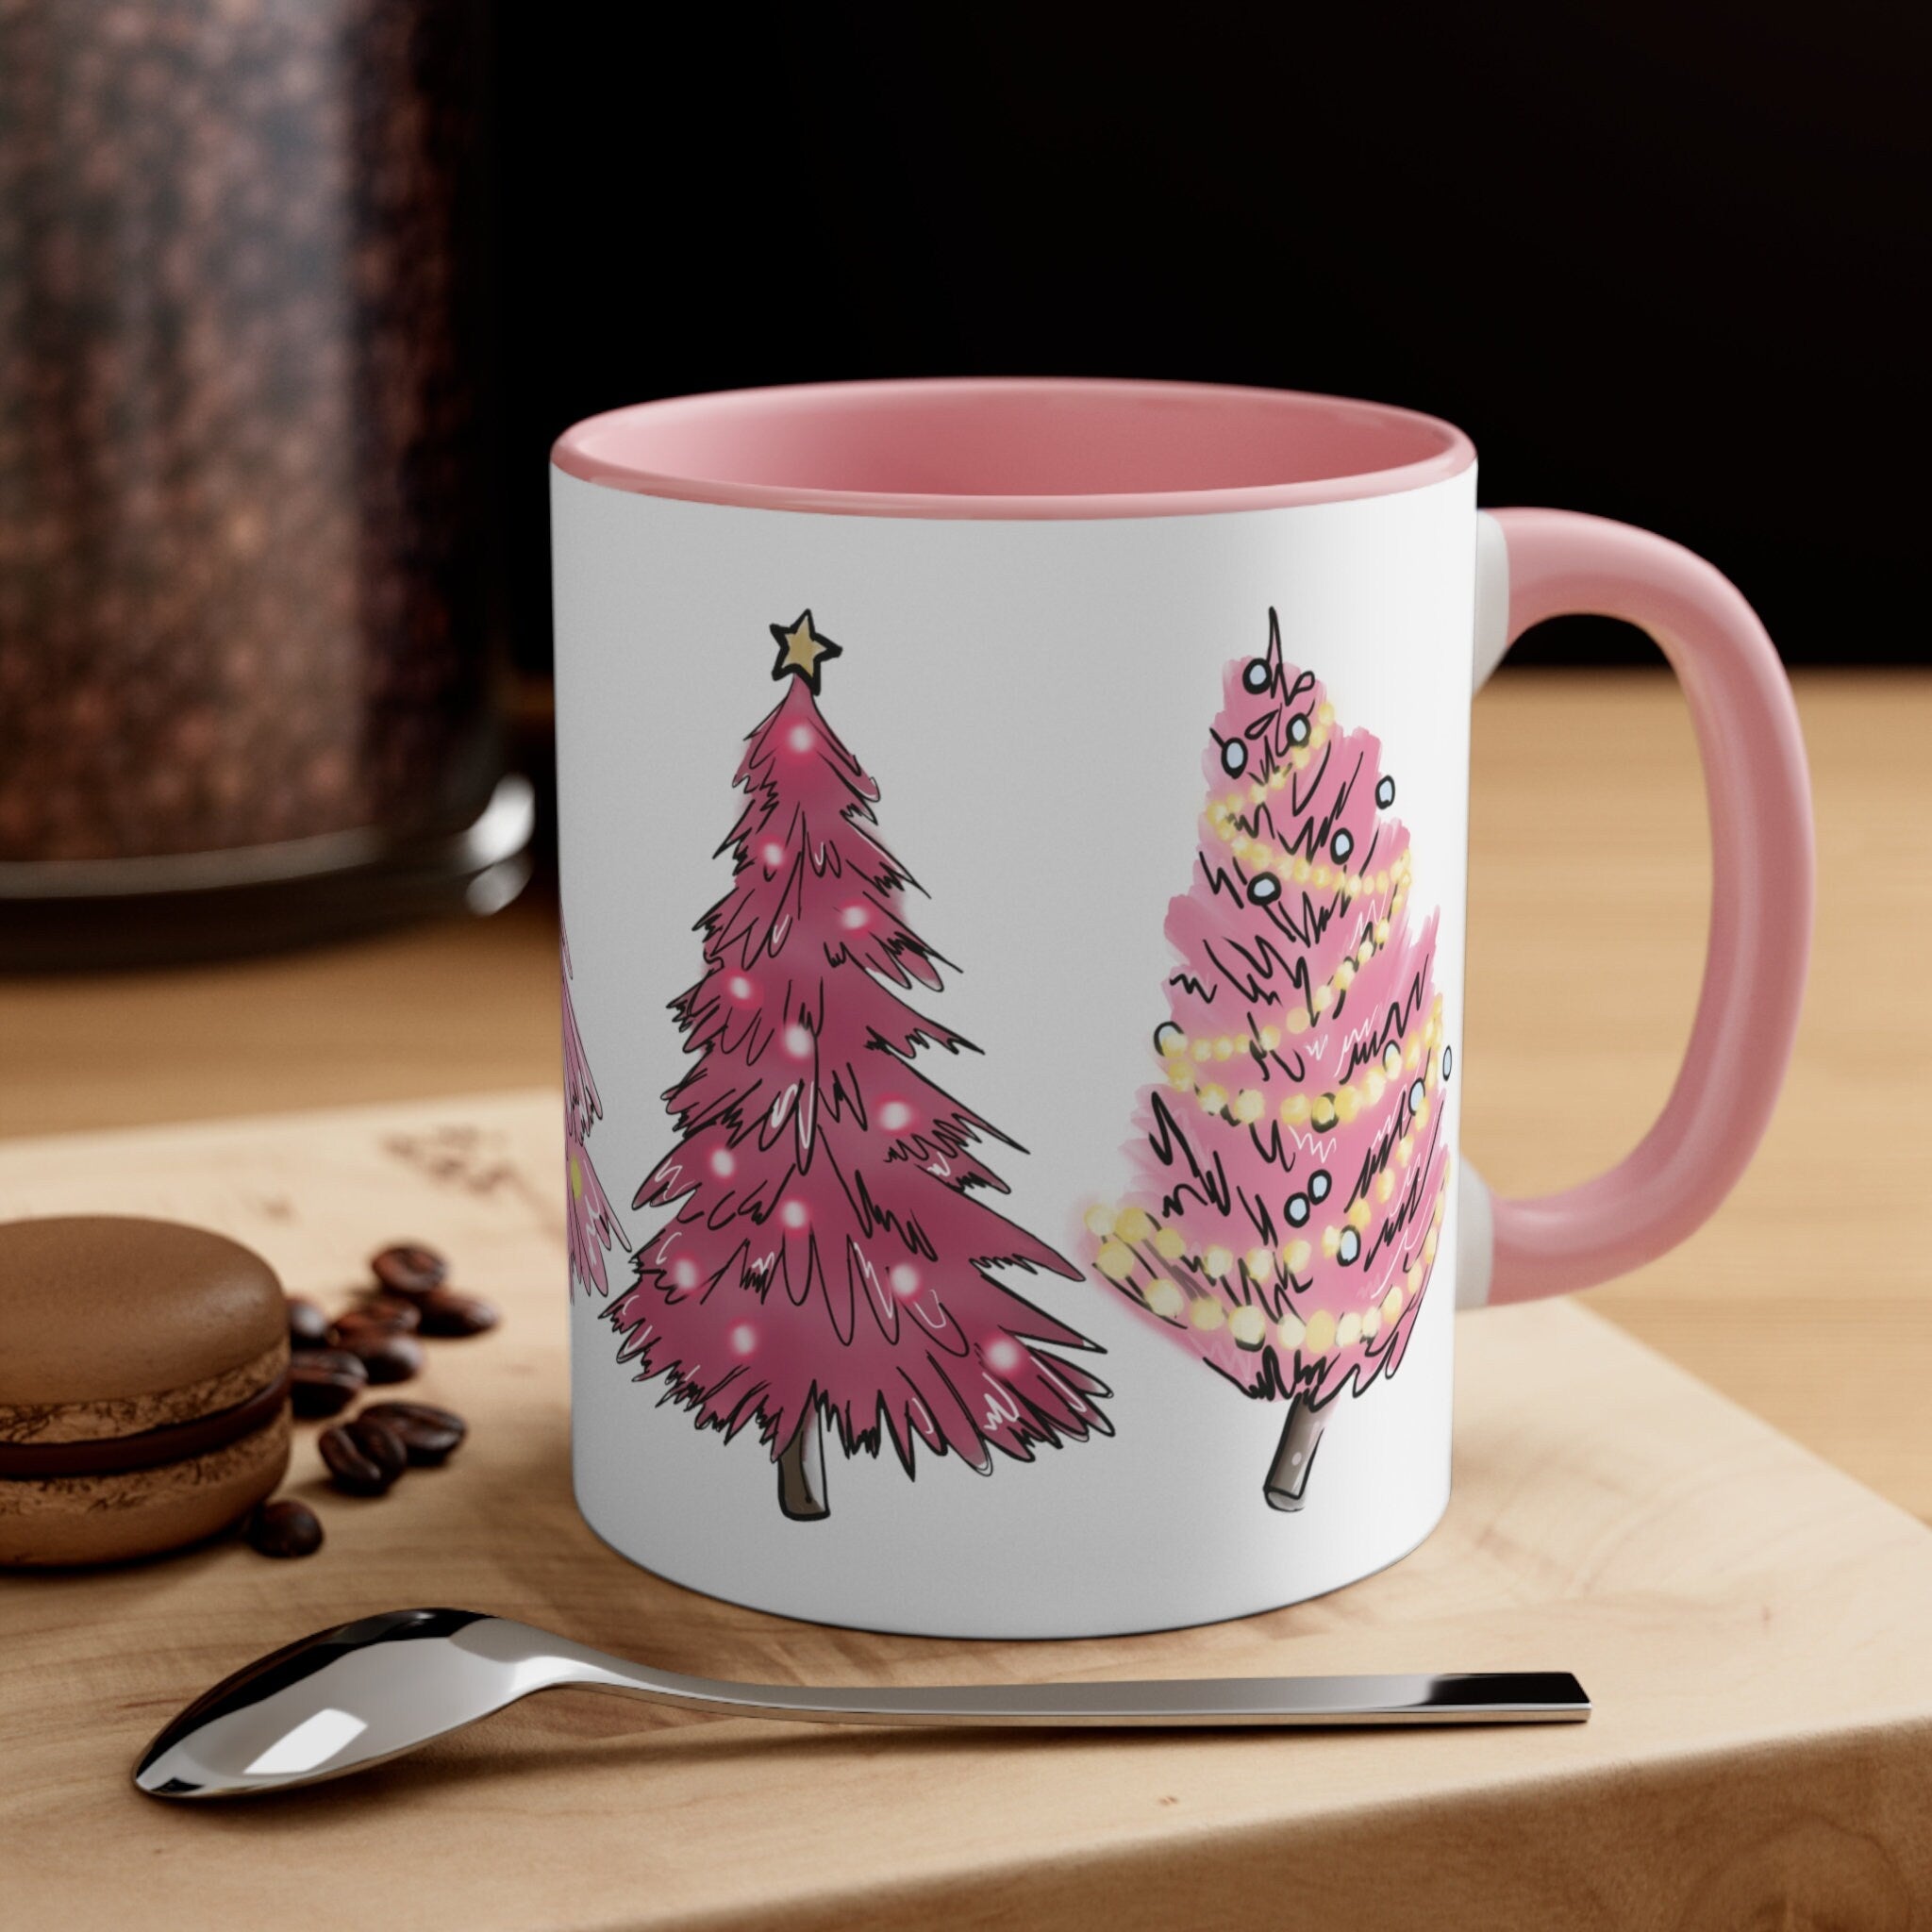 Pink Christmas Trees Coffee Mug 11oz | White Exterior | Festive Holiday Cup | Unique Christmas Gift